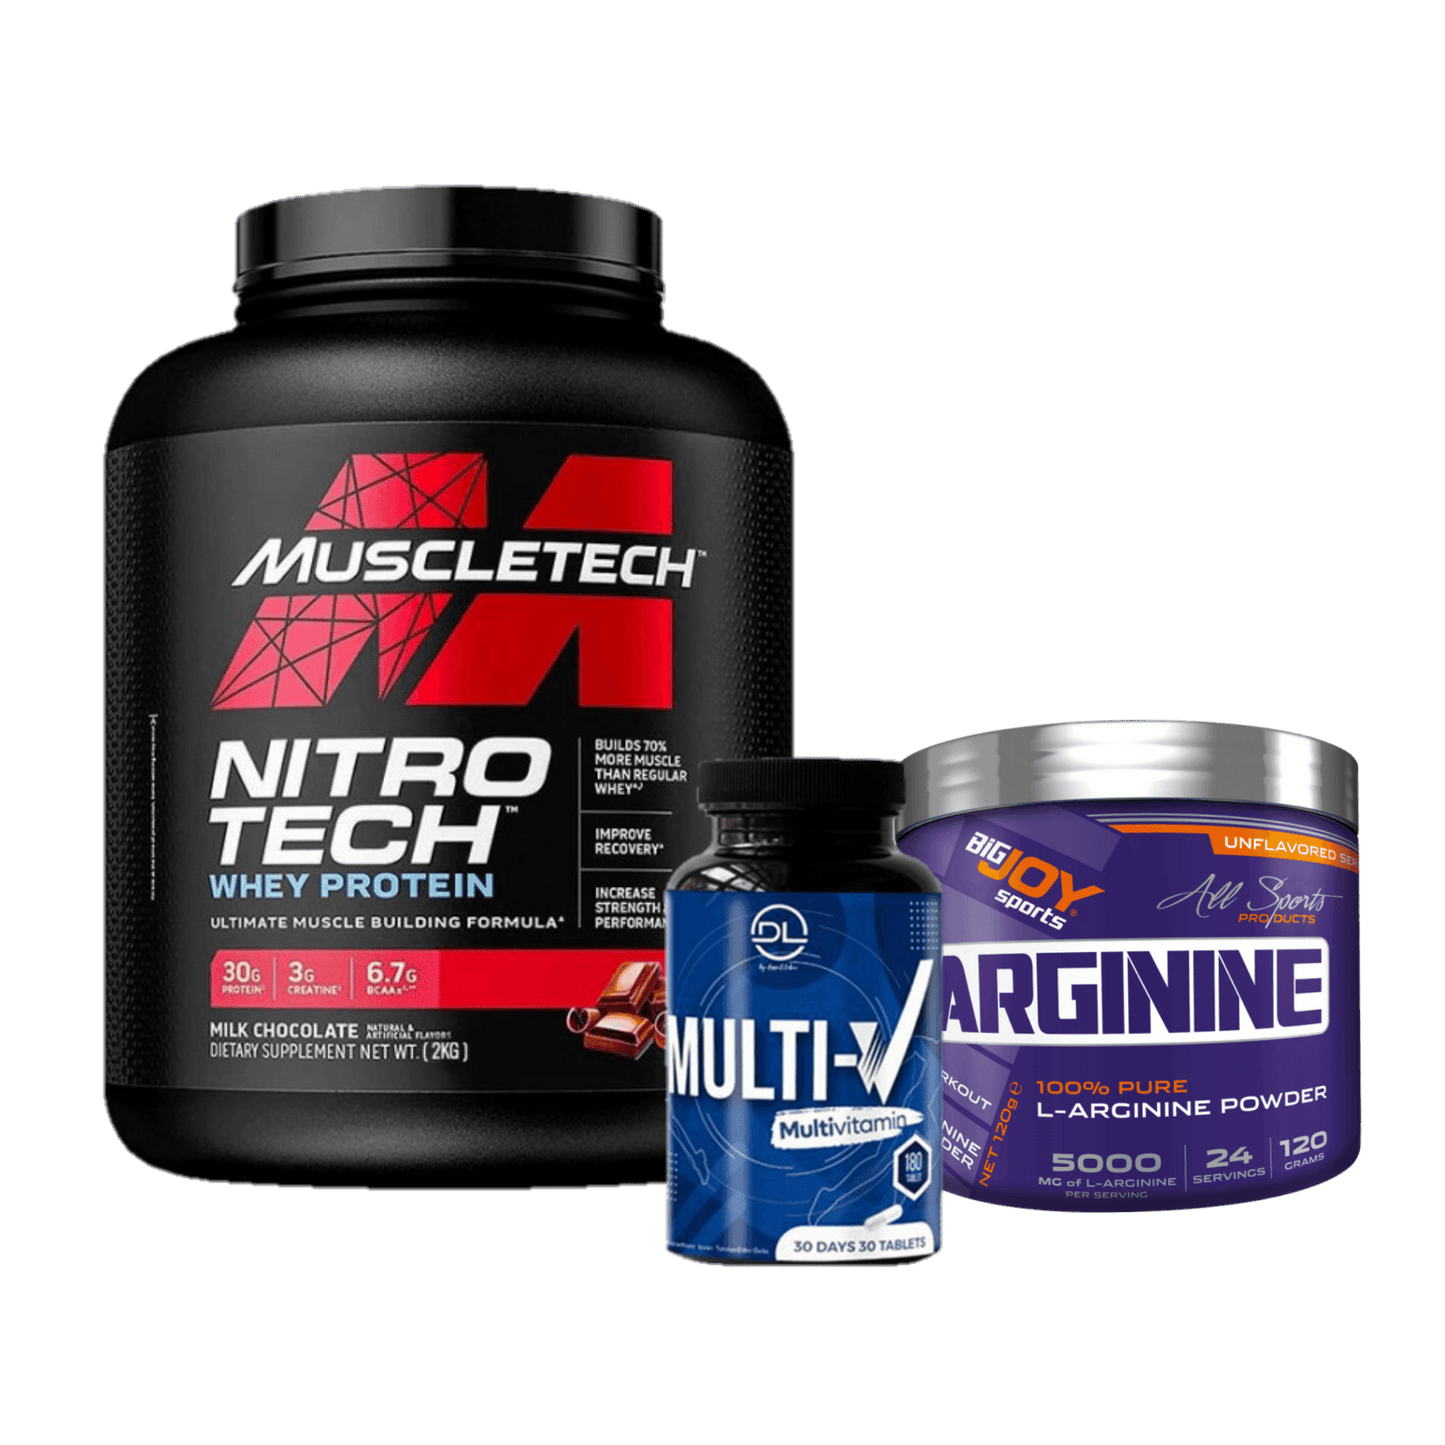 Nitrotech 4Lbs + Arginine + Multivitamins - The Supplements Factory